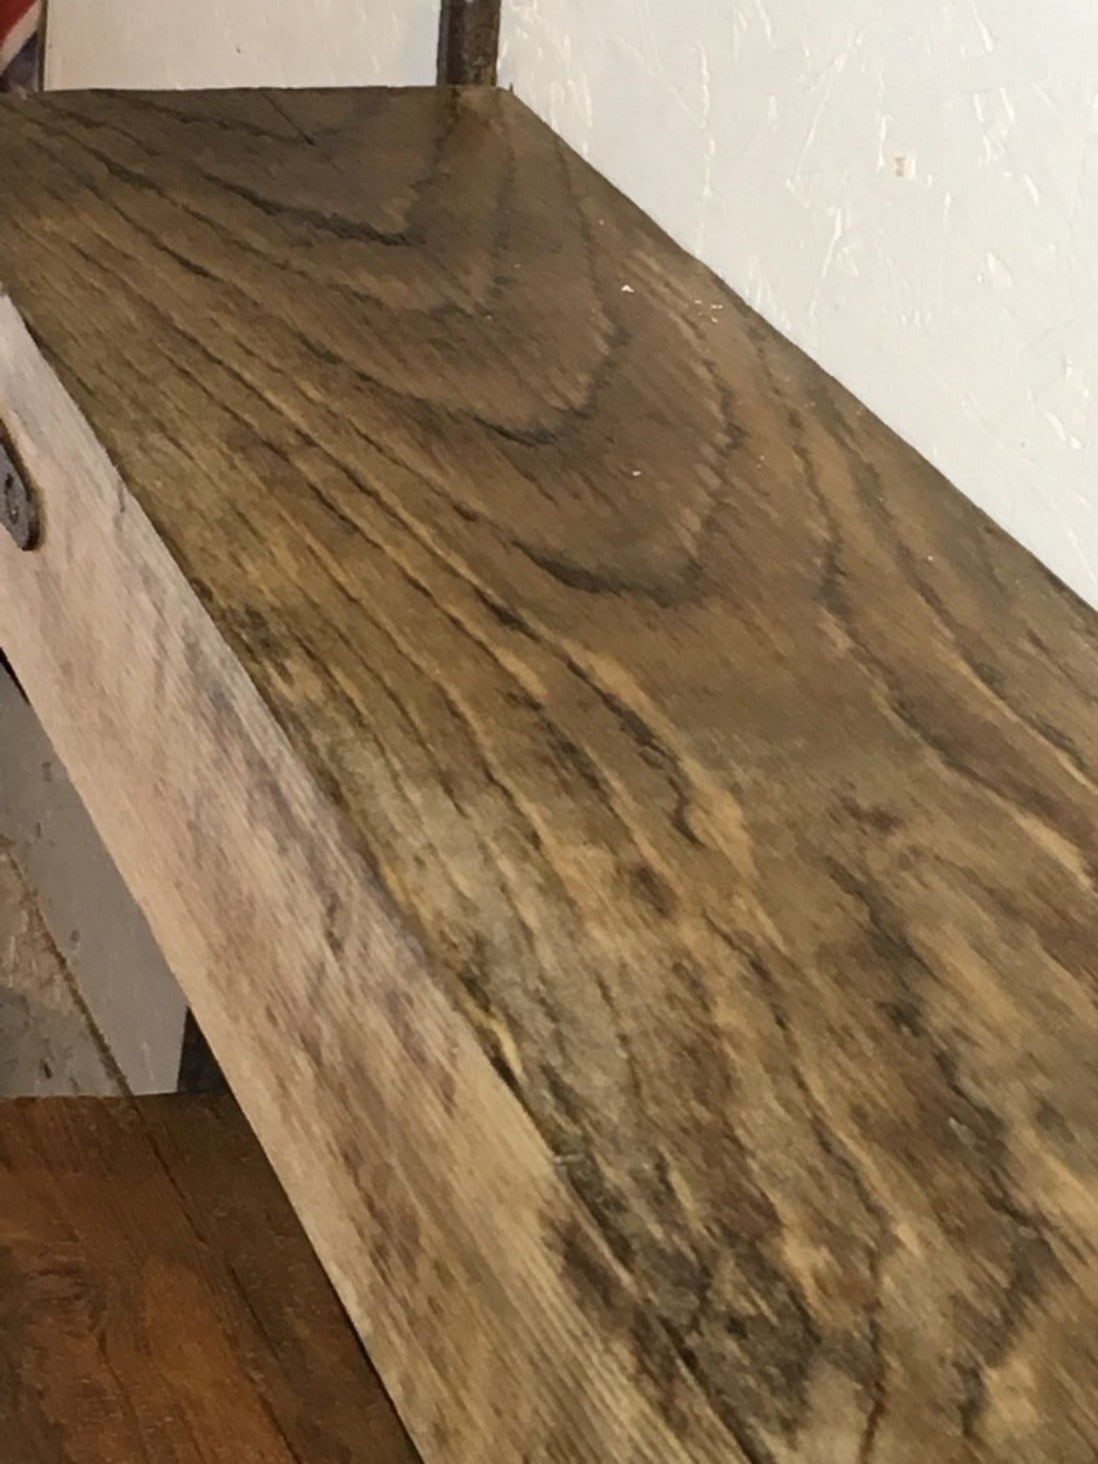 90.3x14.5cm Reclaimed Old Pine Timber Beam Floating Over Mantle Shelf & Brackets